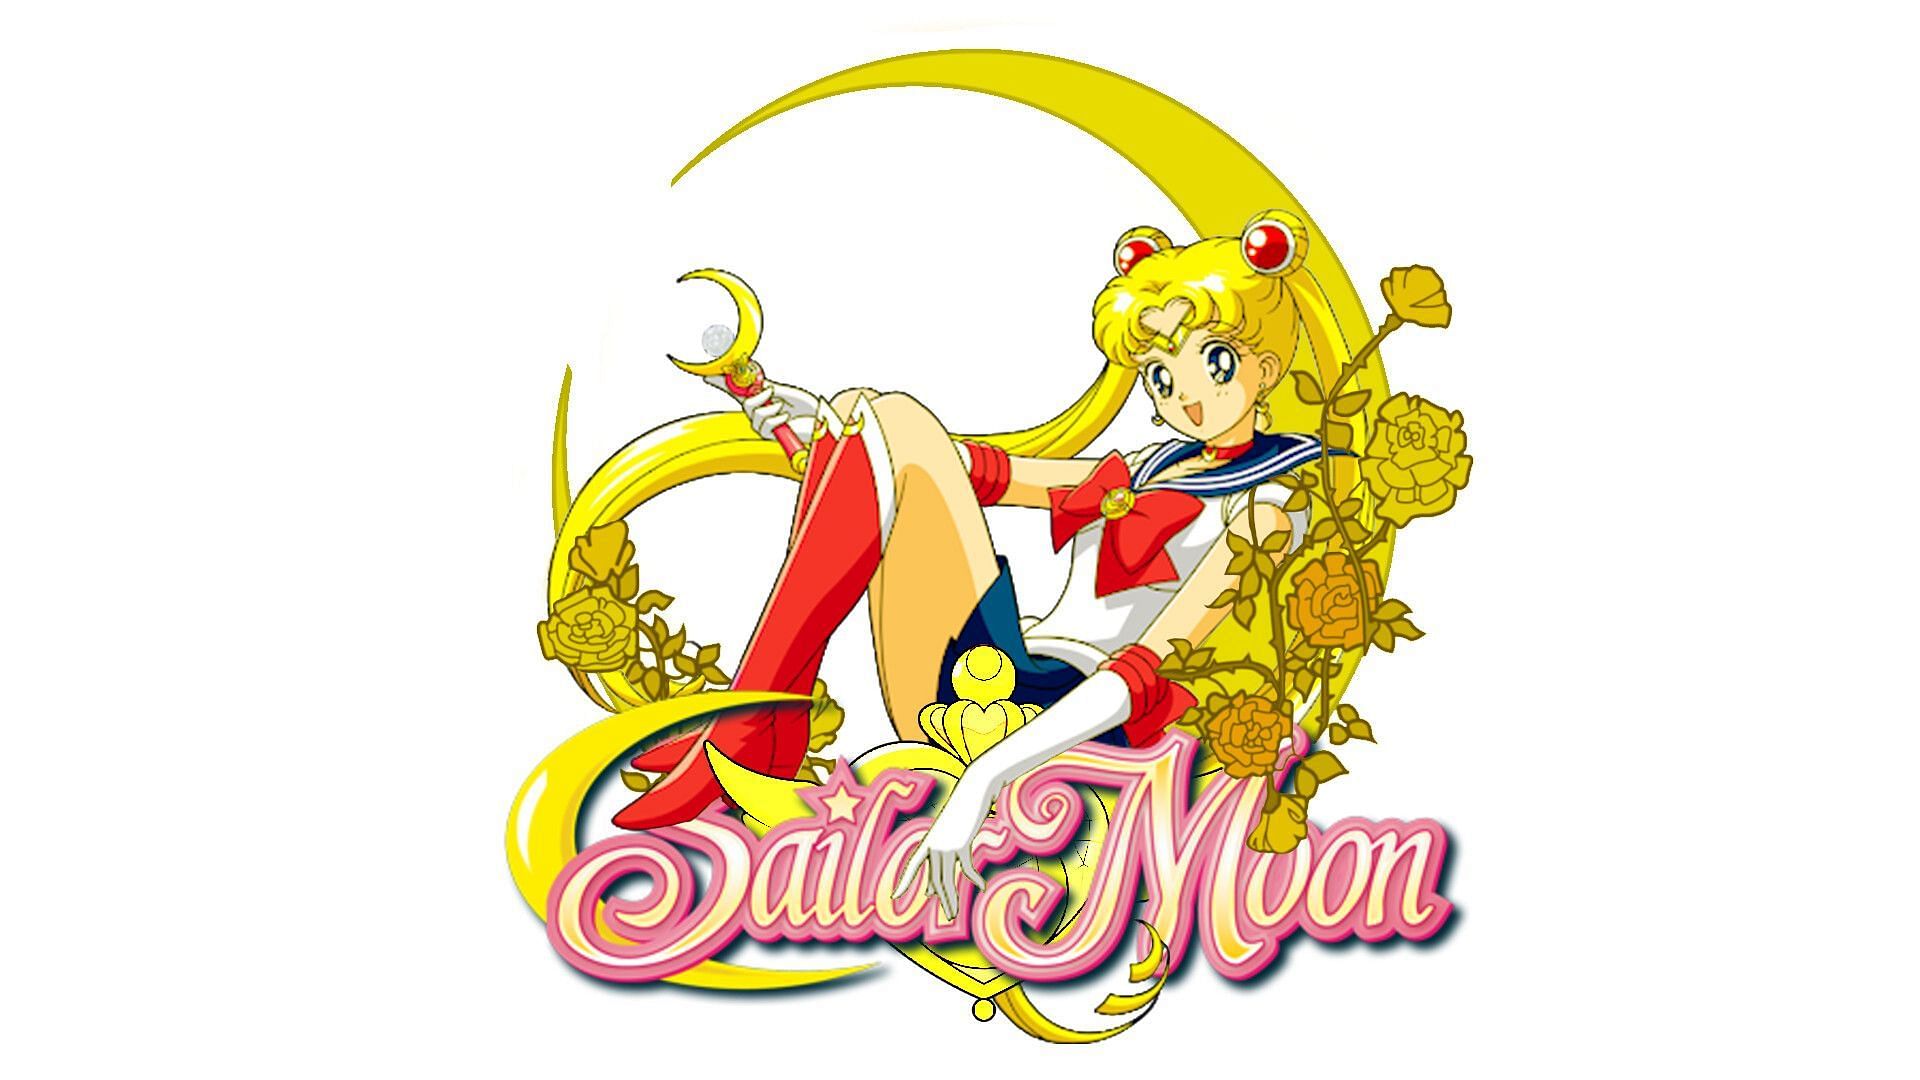 One of the series logos (Image Credits: Naoko Takeuchi/Nakayoshi, Viz Media, Sailor Moon)